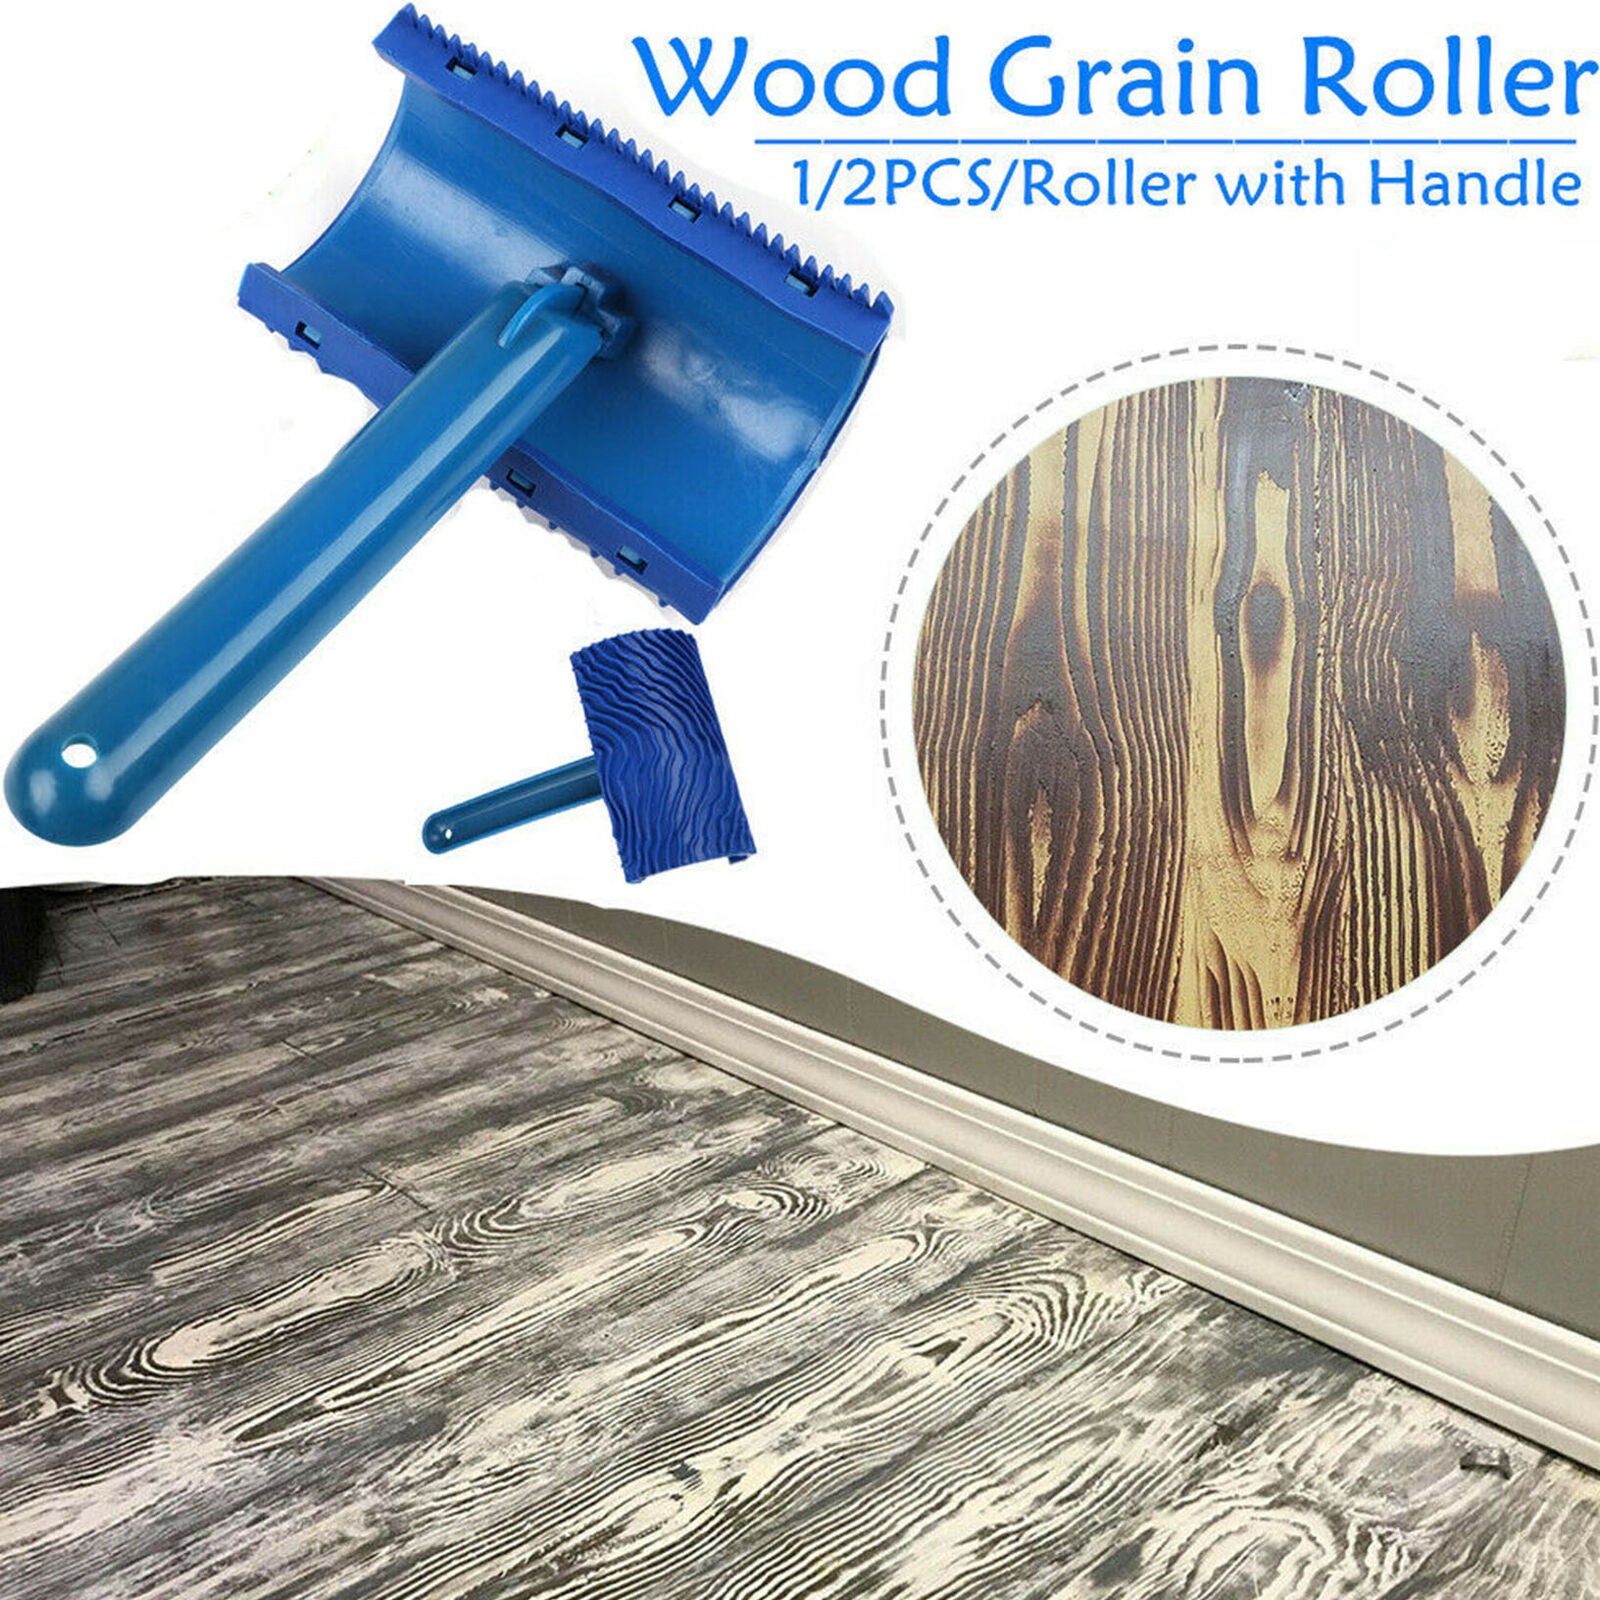 Imitation Wood Grain Paint Roller Brush Wall Texture Painting Art Tool Set